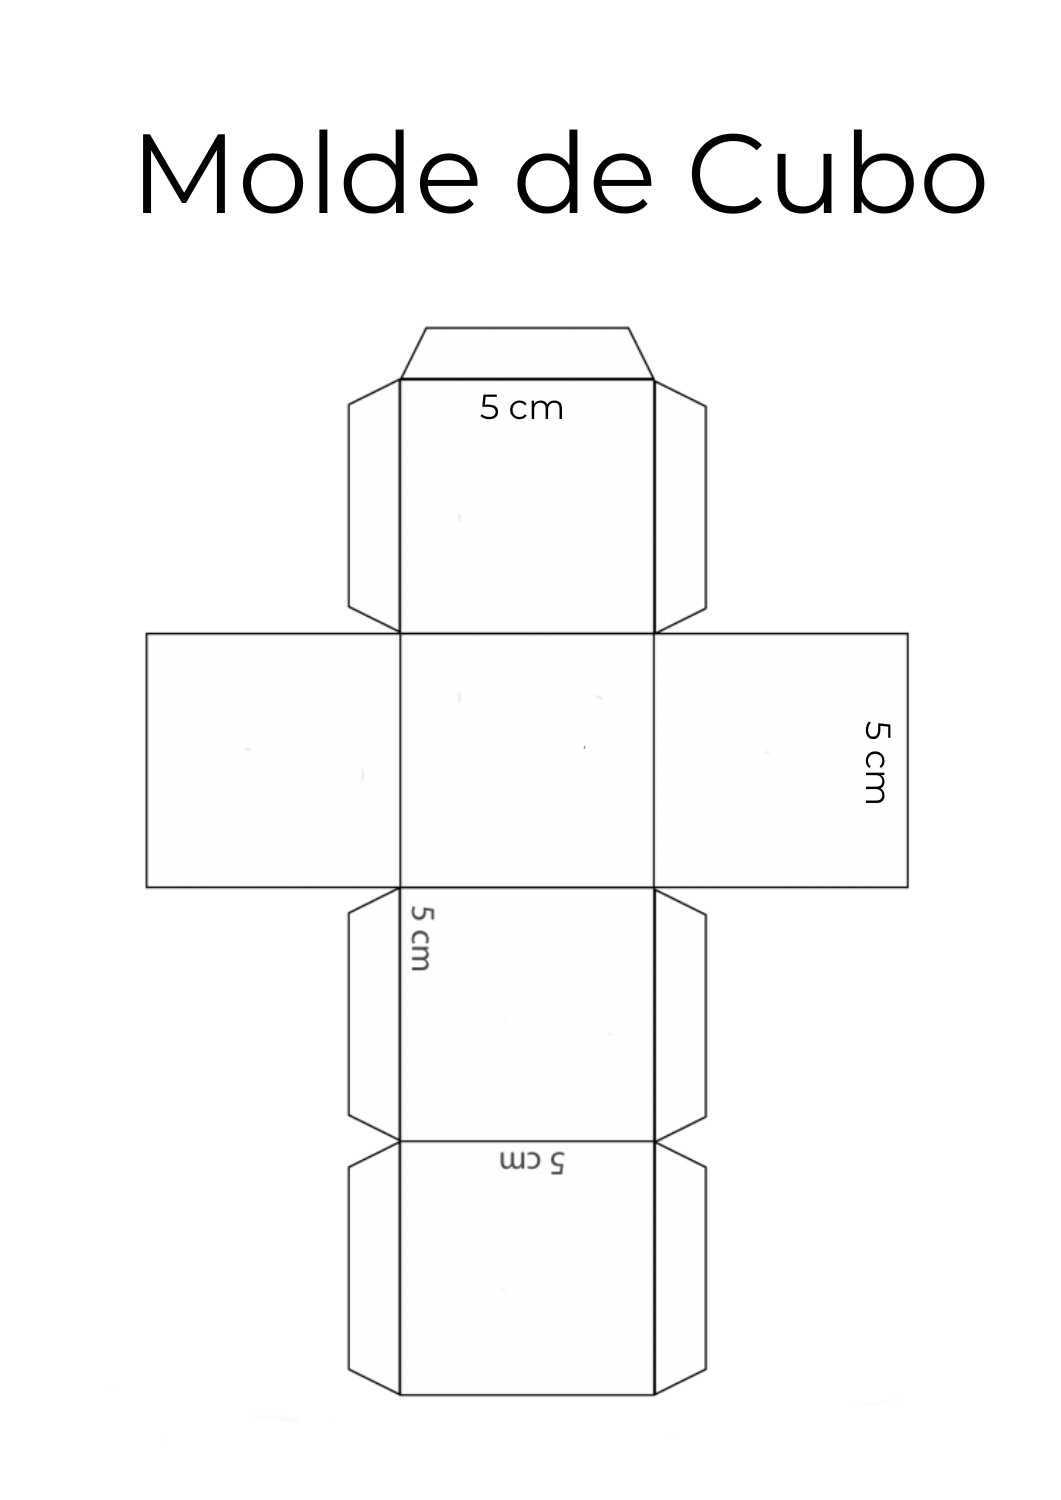 Molde de Cubo 5x5 para imprimir